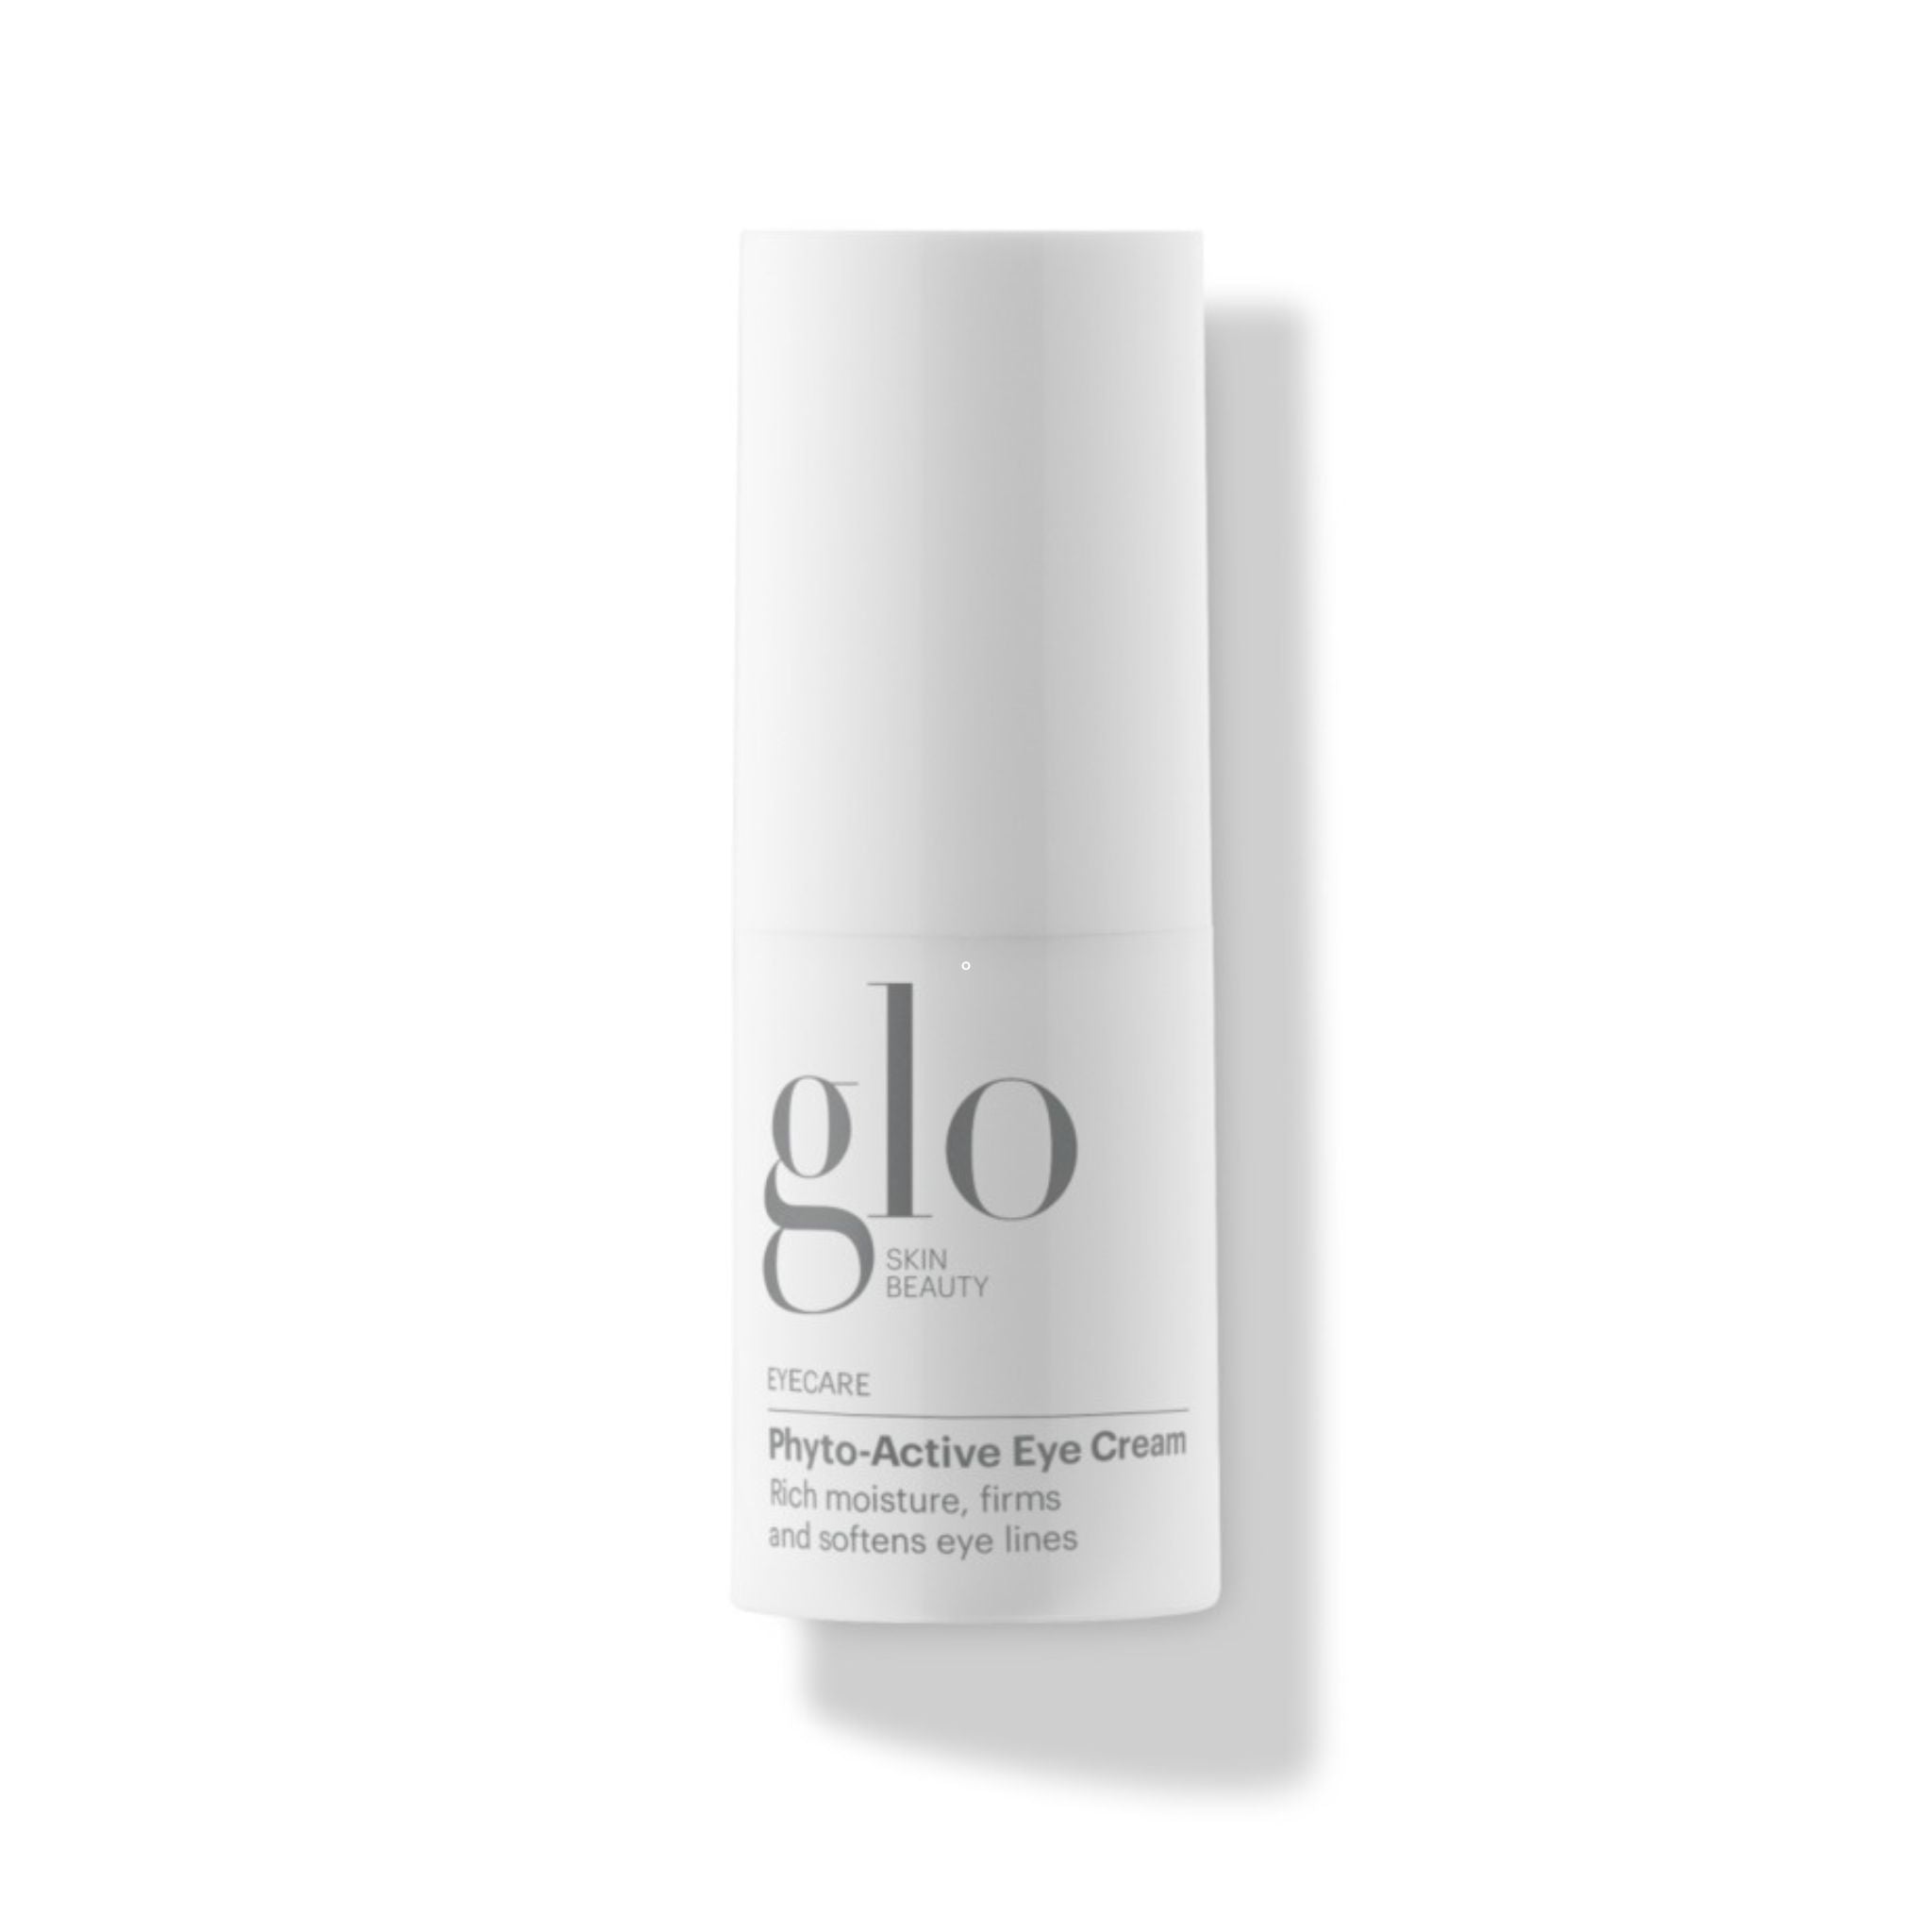 Glo Skin Beauty - Phyto-Active Eye Cream